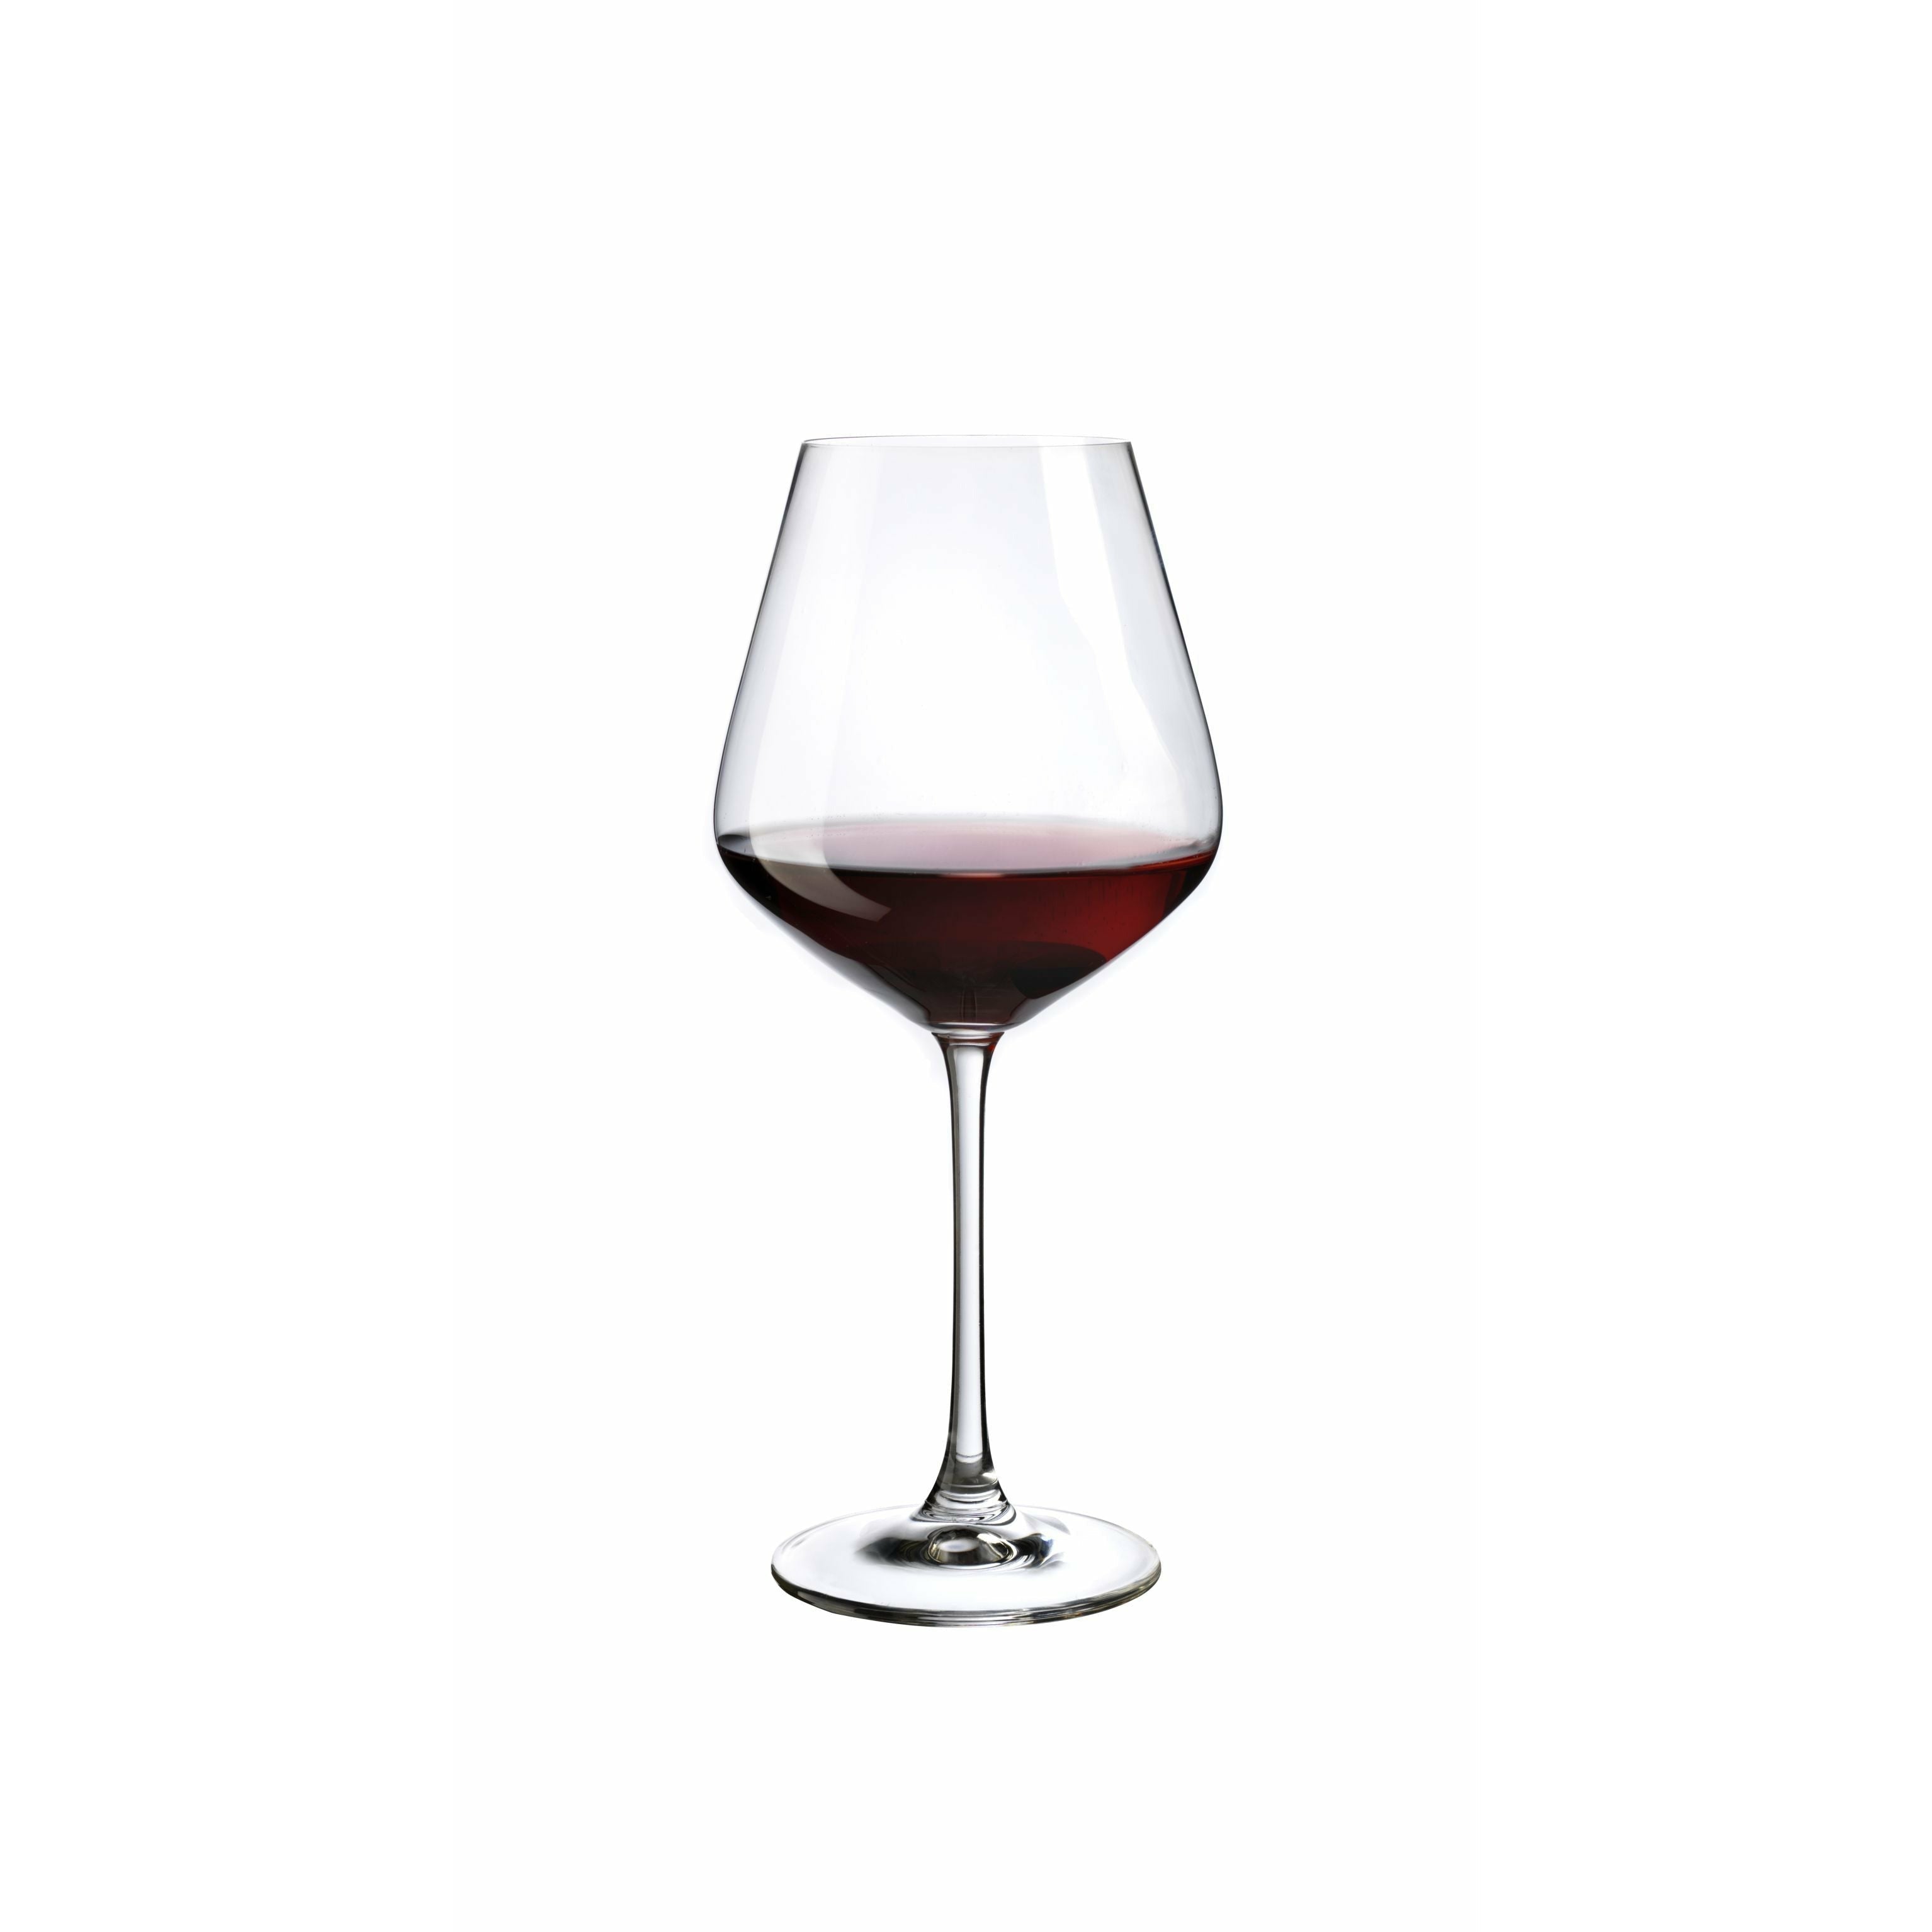 Le Creuset Glazen ingesteld rode wijn 4 pc's 069 L, 4 pc's.